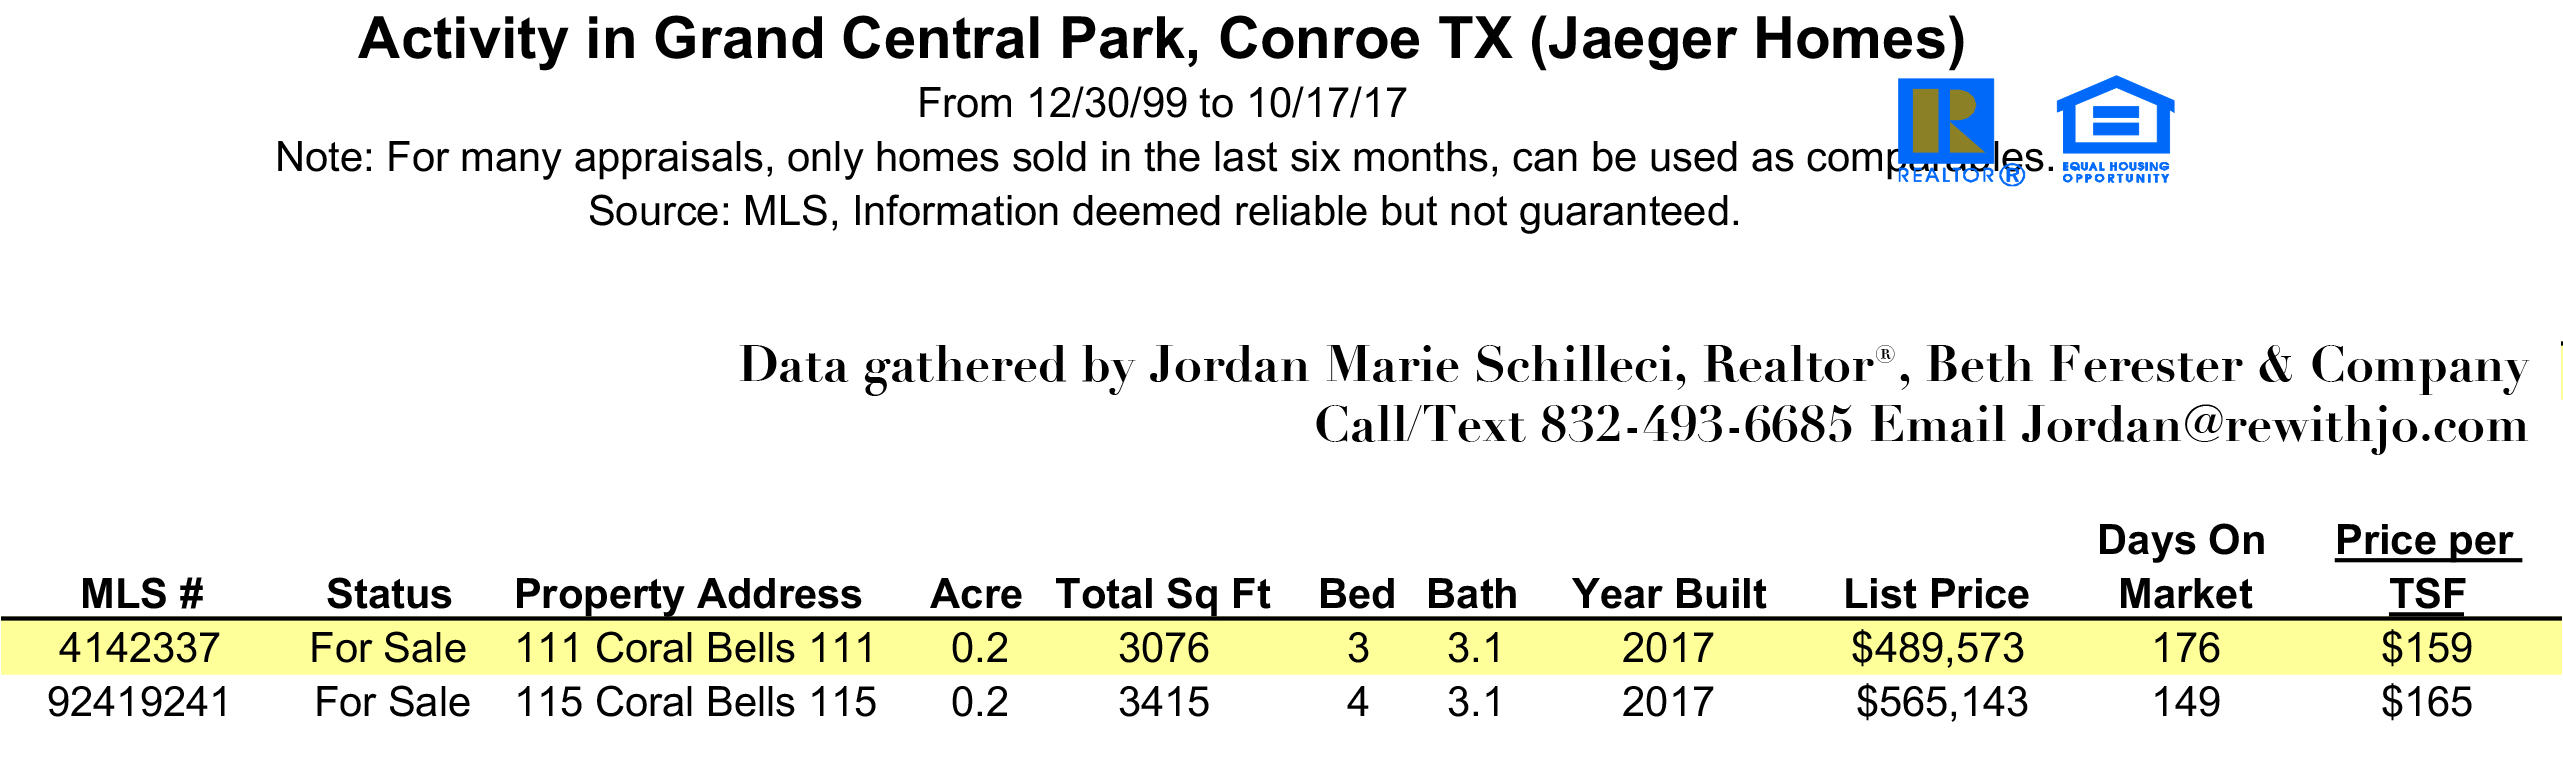 Jaeger Homes For Sale in Grand Central Park Mid-October 2017 Spr